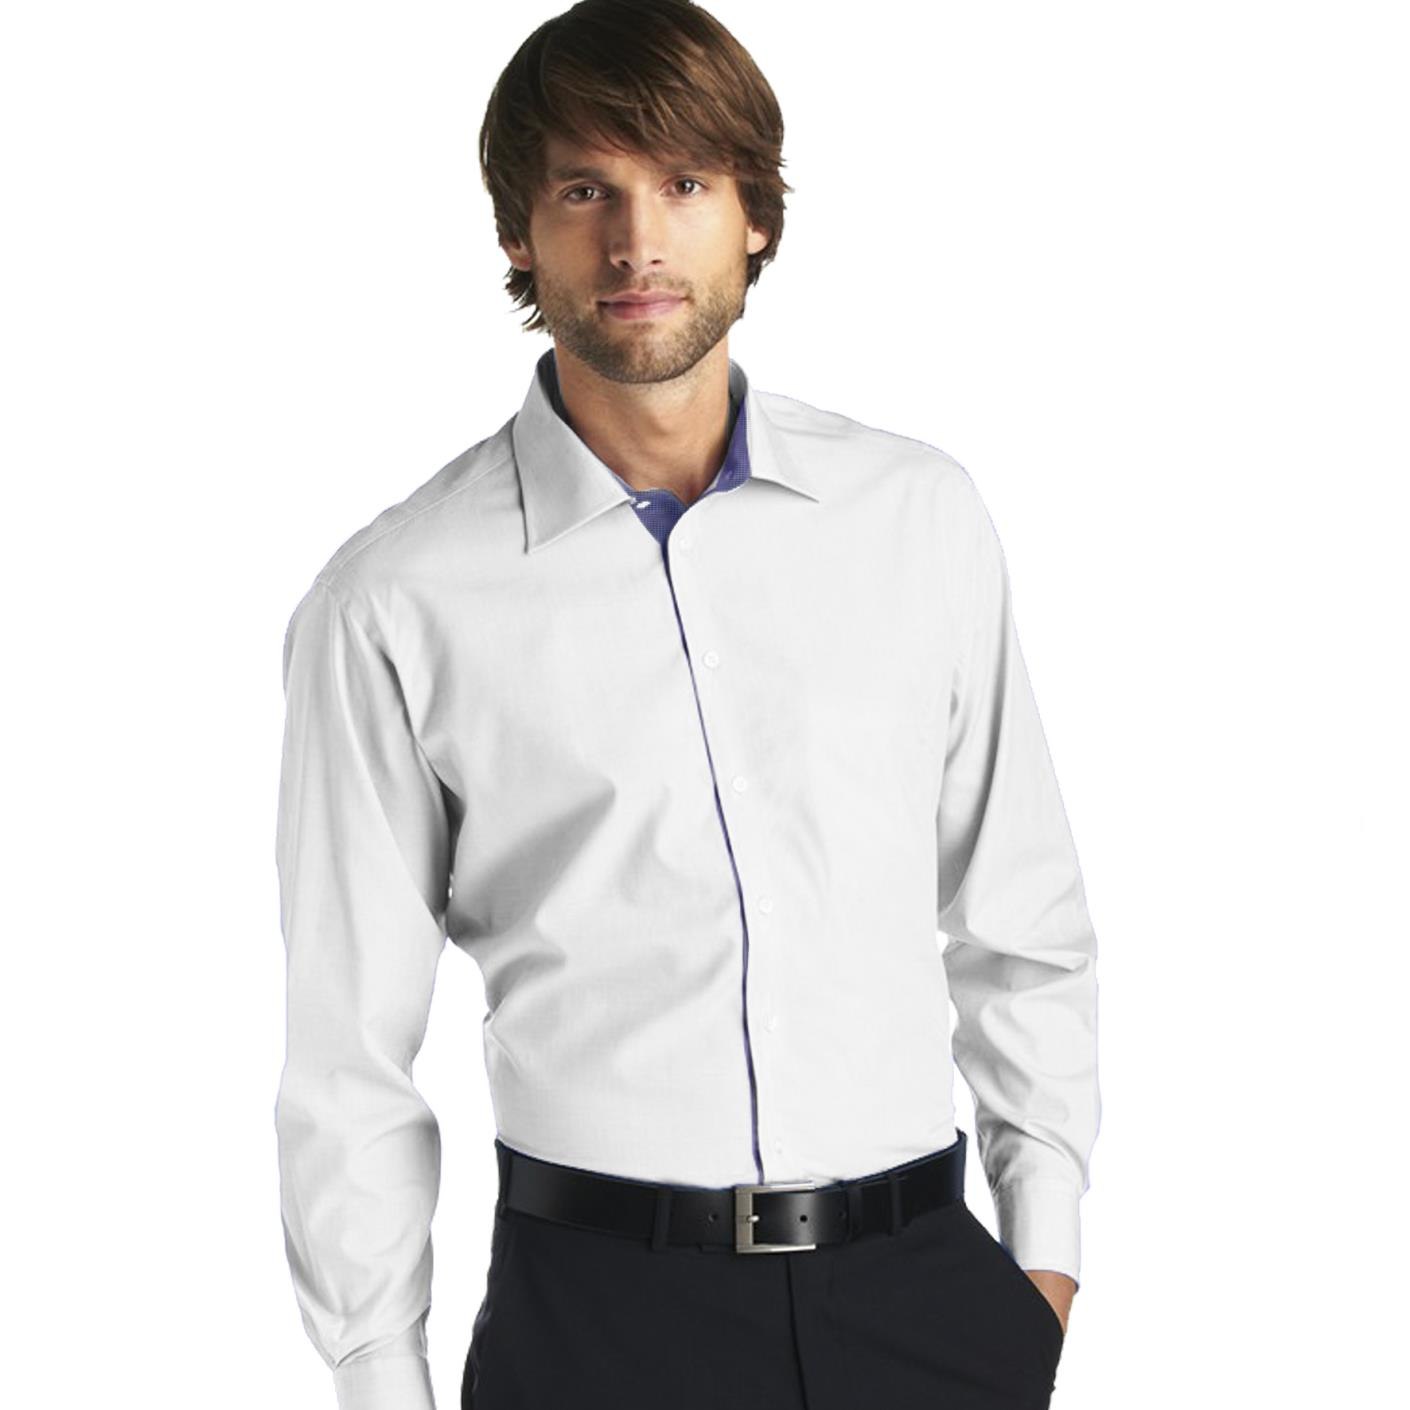 Мужские рубашки каталог. Рубашка мужская. Белая рубашка. Мужская белая рубашка. Рубашка мужская с длинным рукавом.